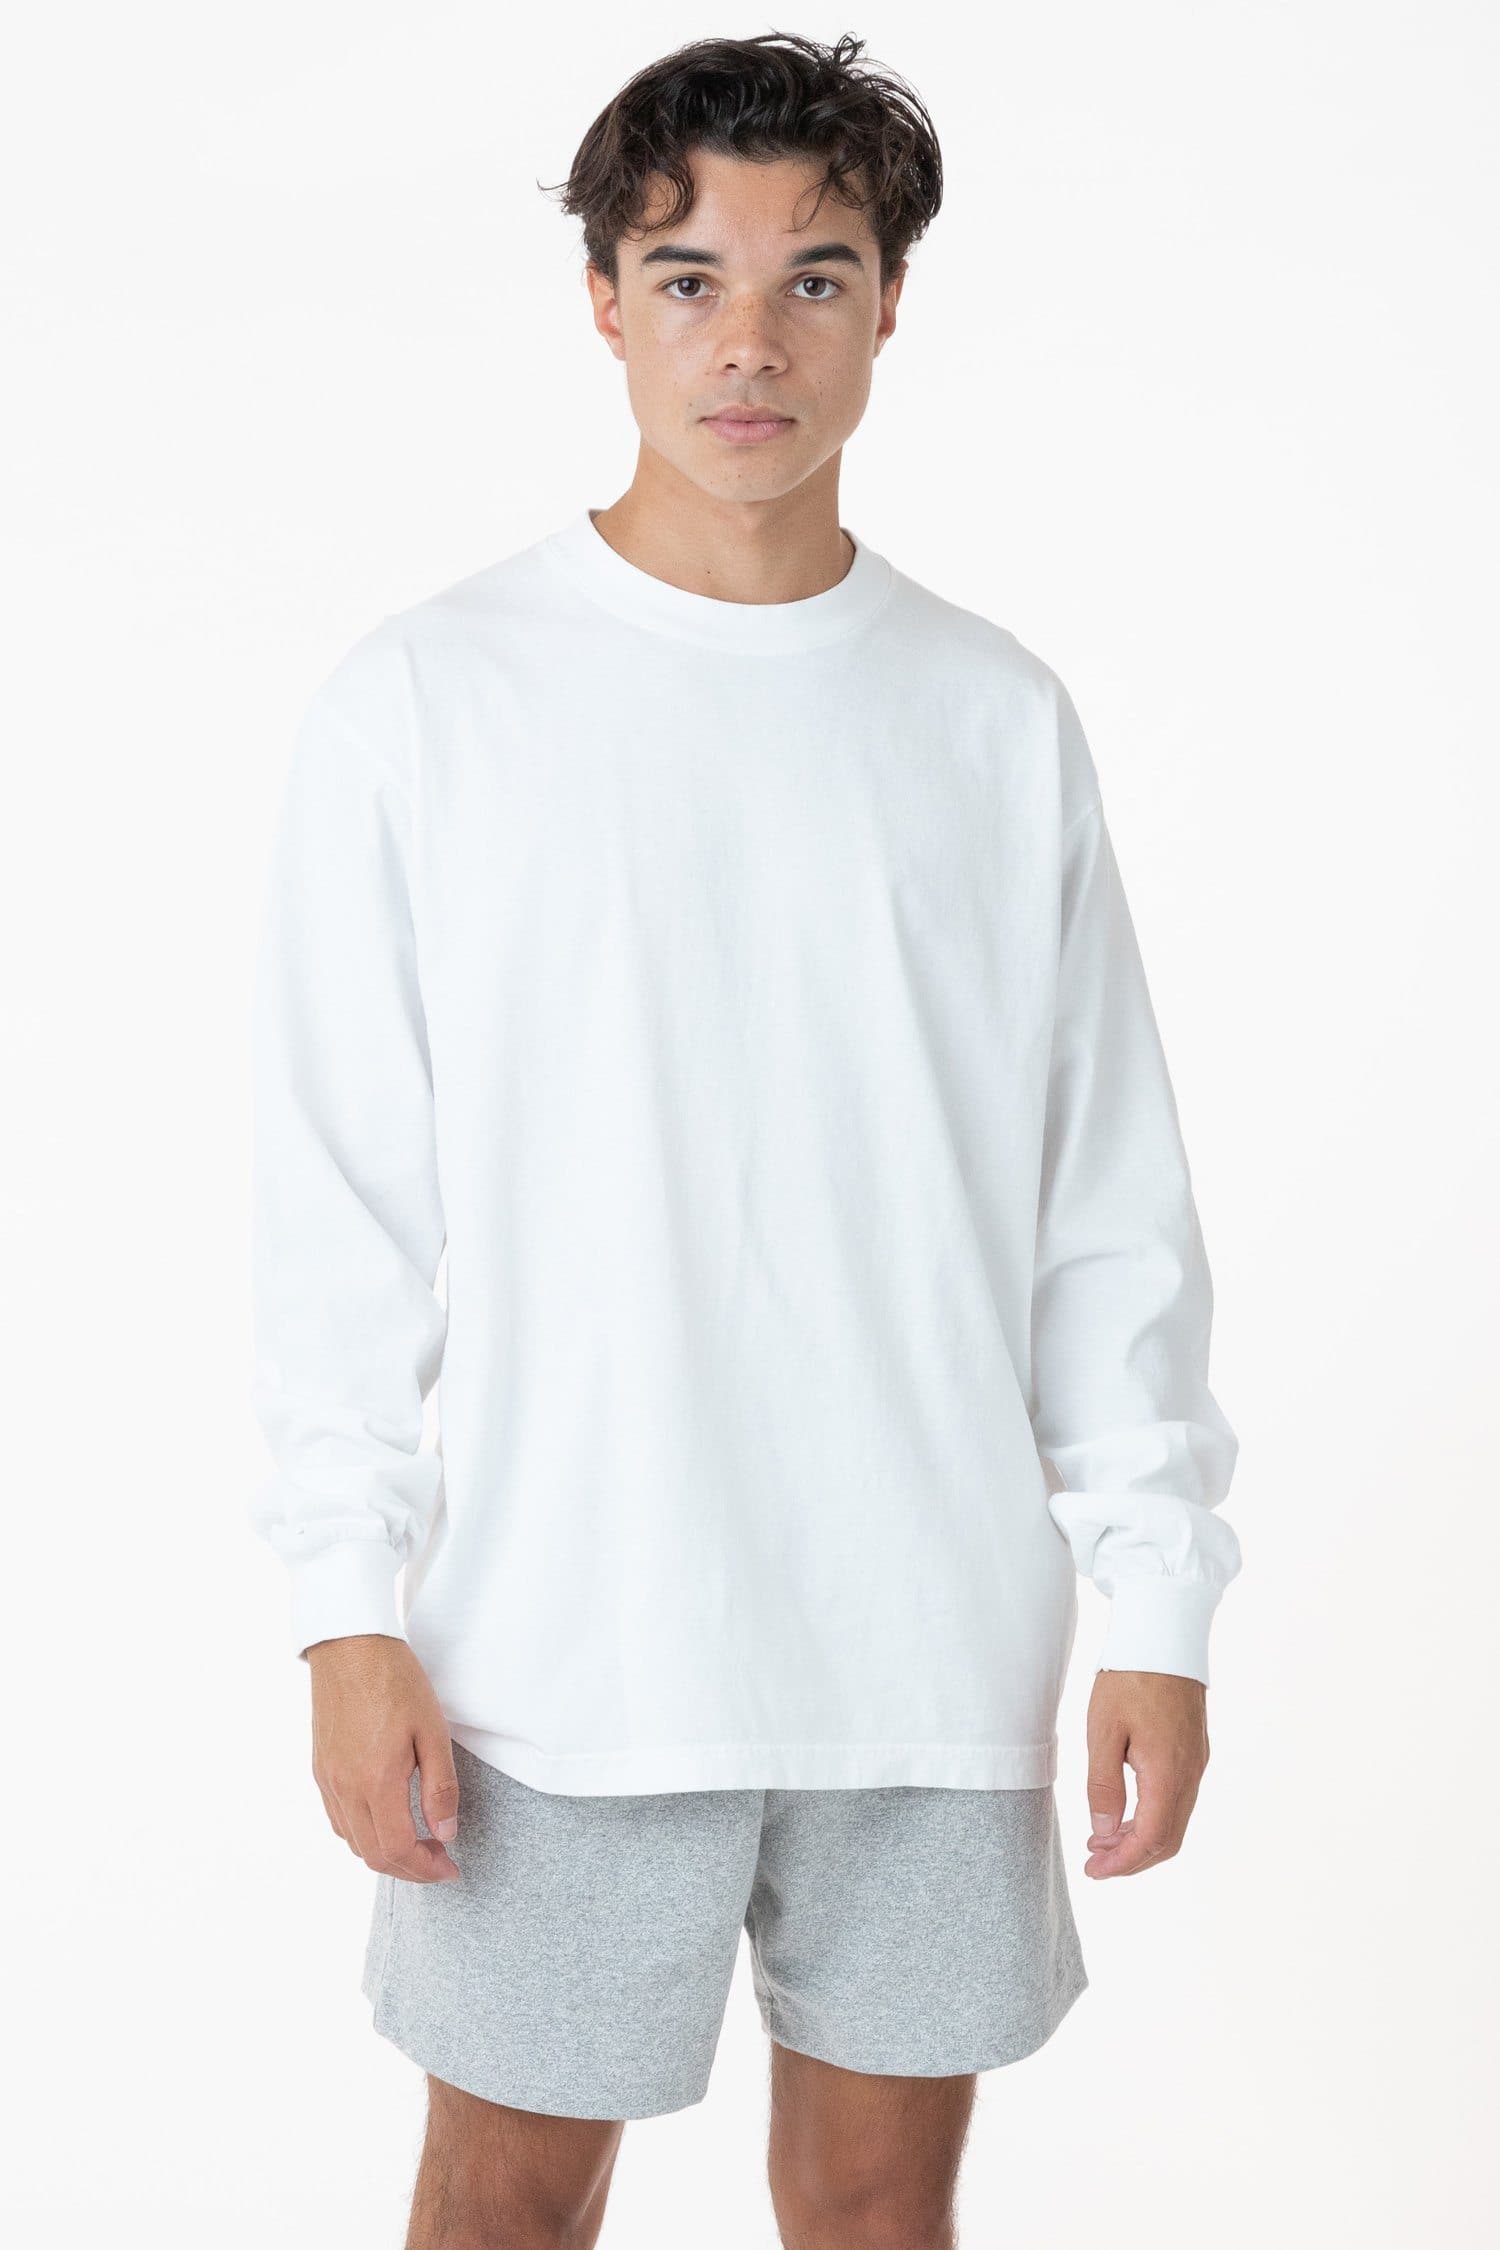 Los Angeles Apparel | Long Sleeve Garment Dye Crew Neck T-Shirt for Men in Off White, Size Medium